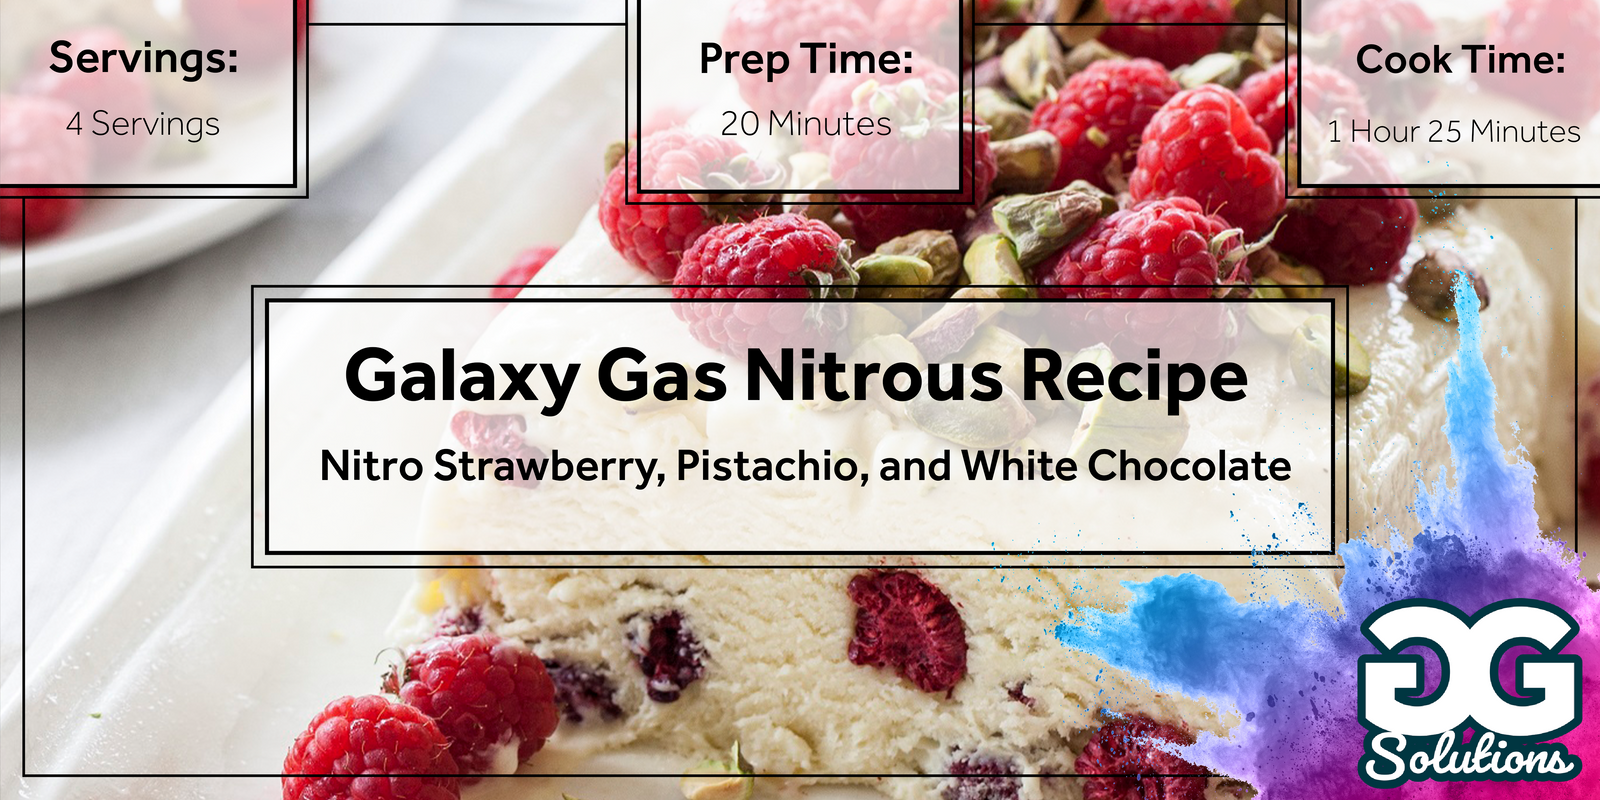 Galaxy Gas Nitrous Recipe: Nitro Strawberry, Pistachio, and White Chocolate